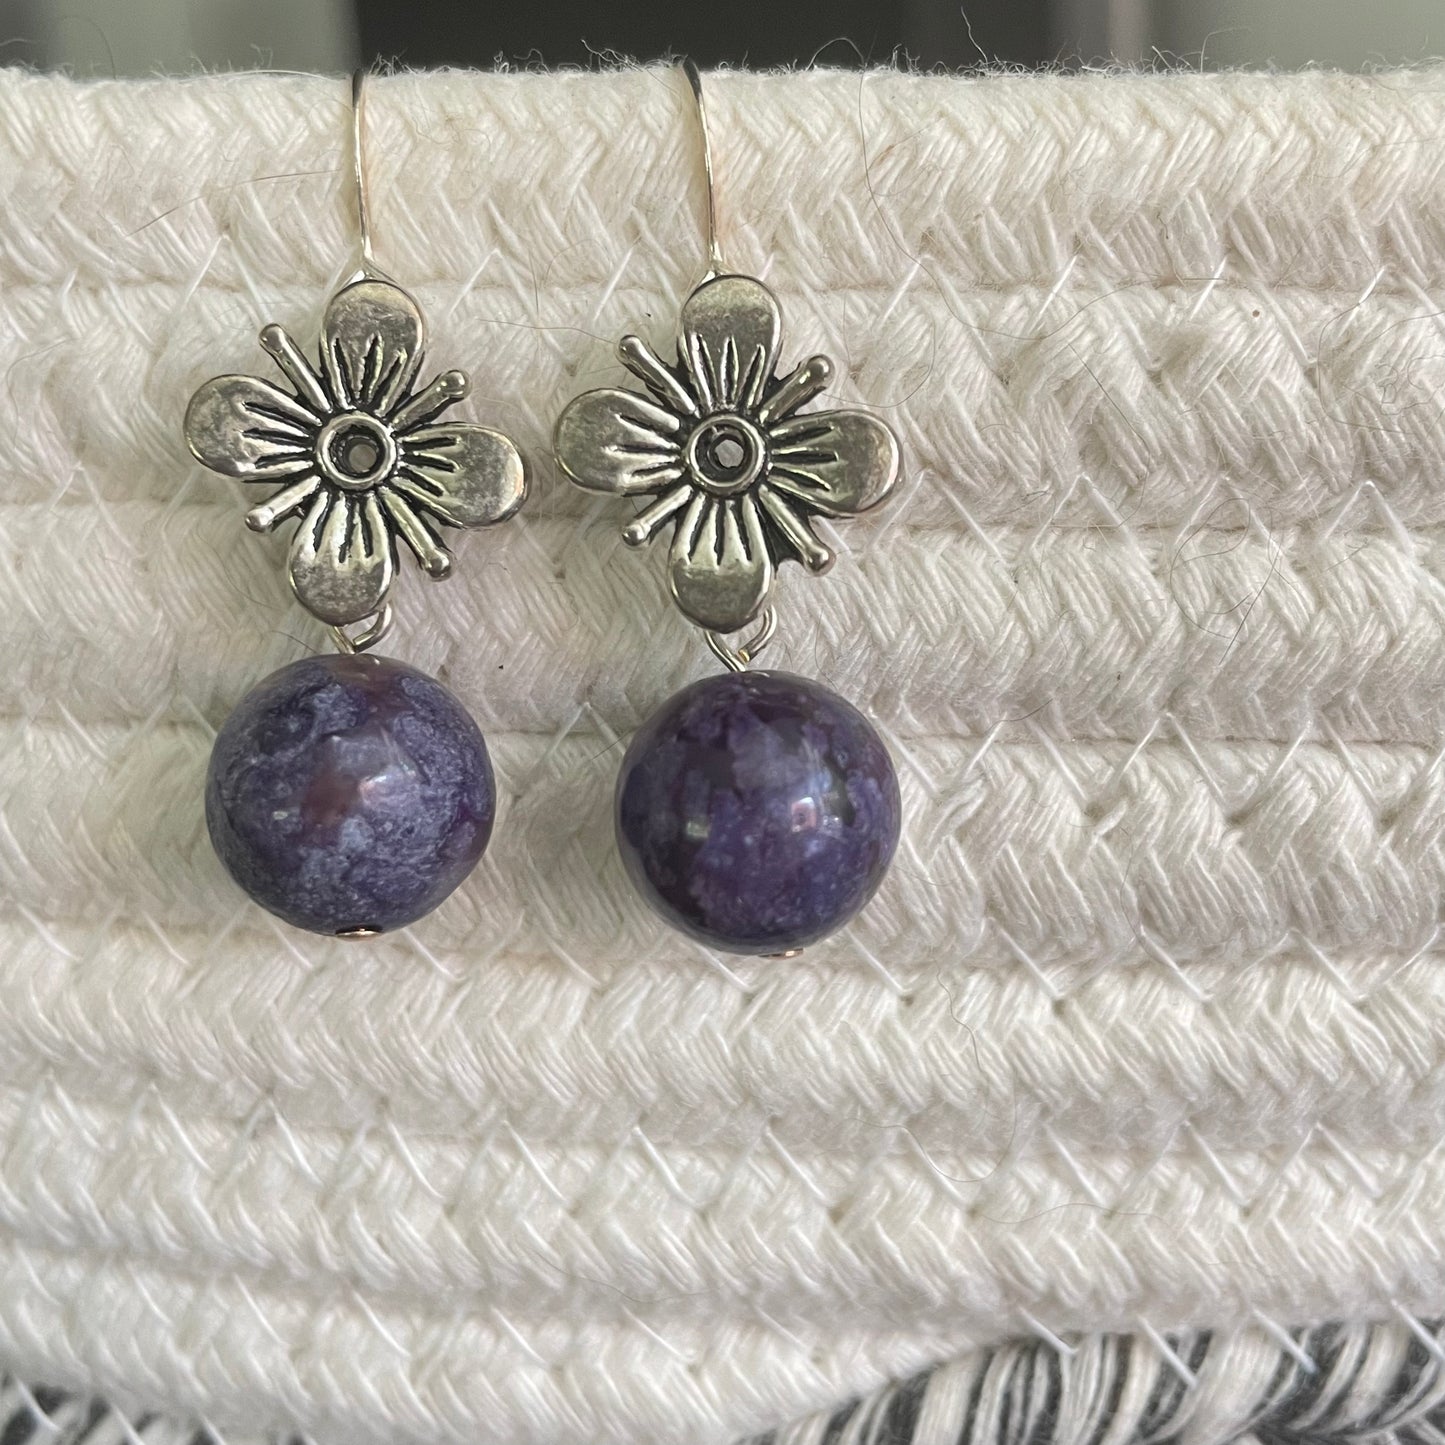 Antiqued Flower & Dark Purple Marbled Jasper Drop Earrings 1.5" close up against ivory woven textile